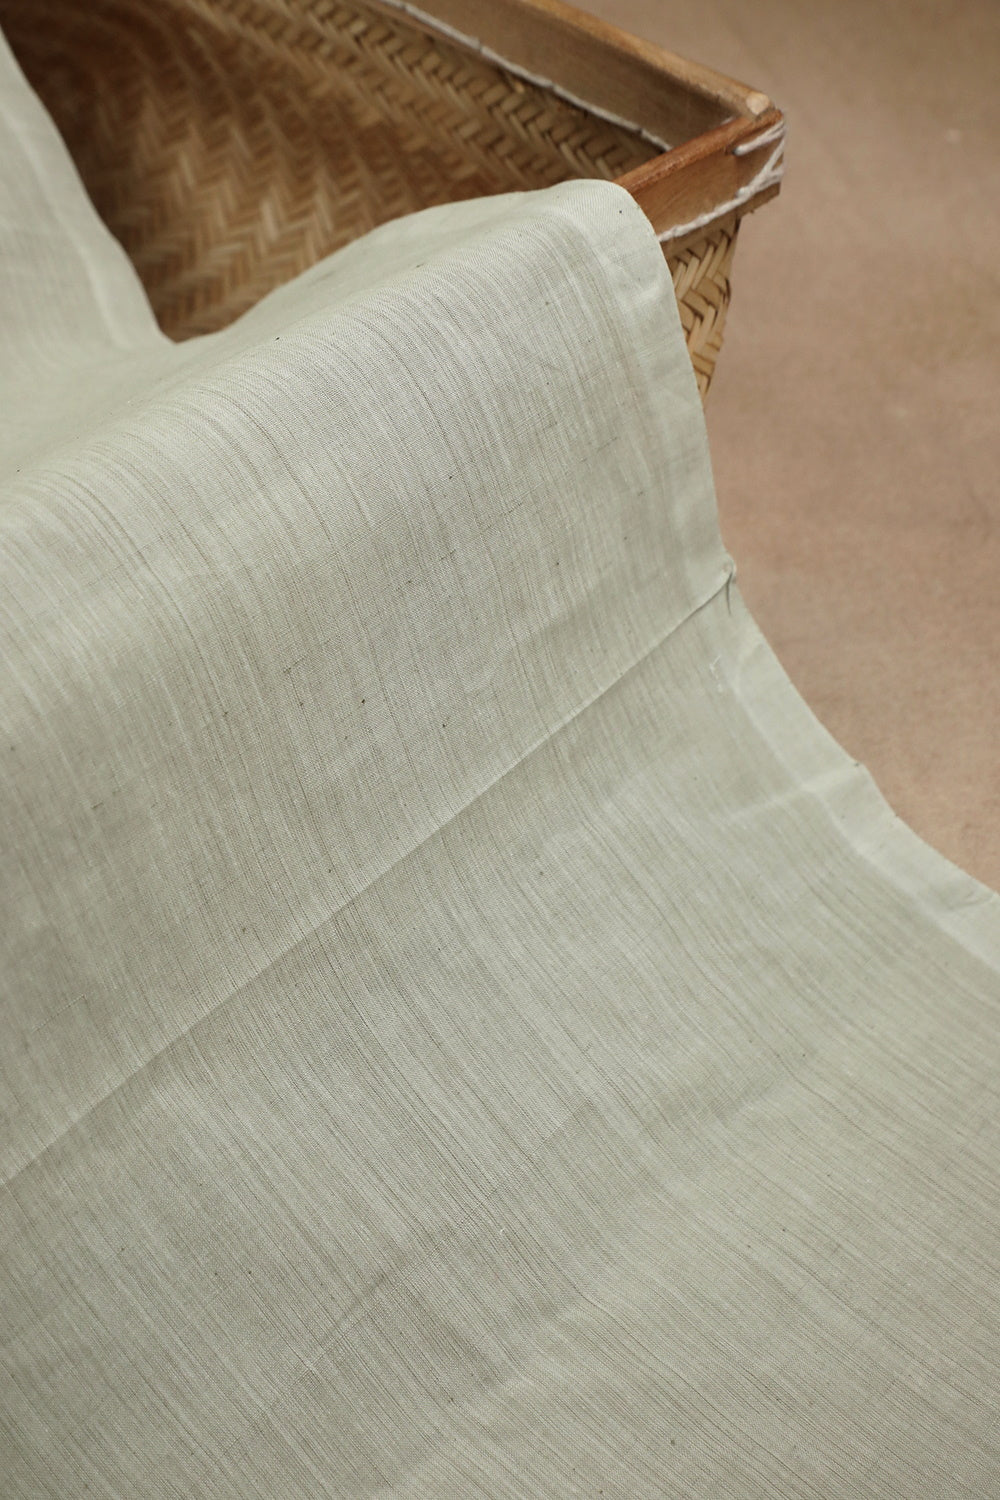 Pastel Grey Plain Mangalagiri Cotton Fabric - 2.1m